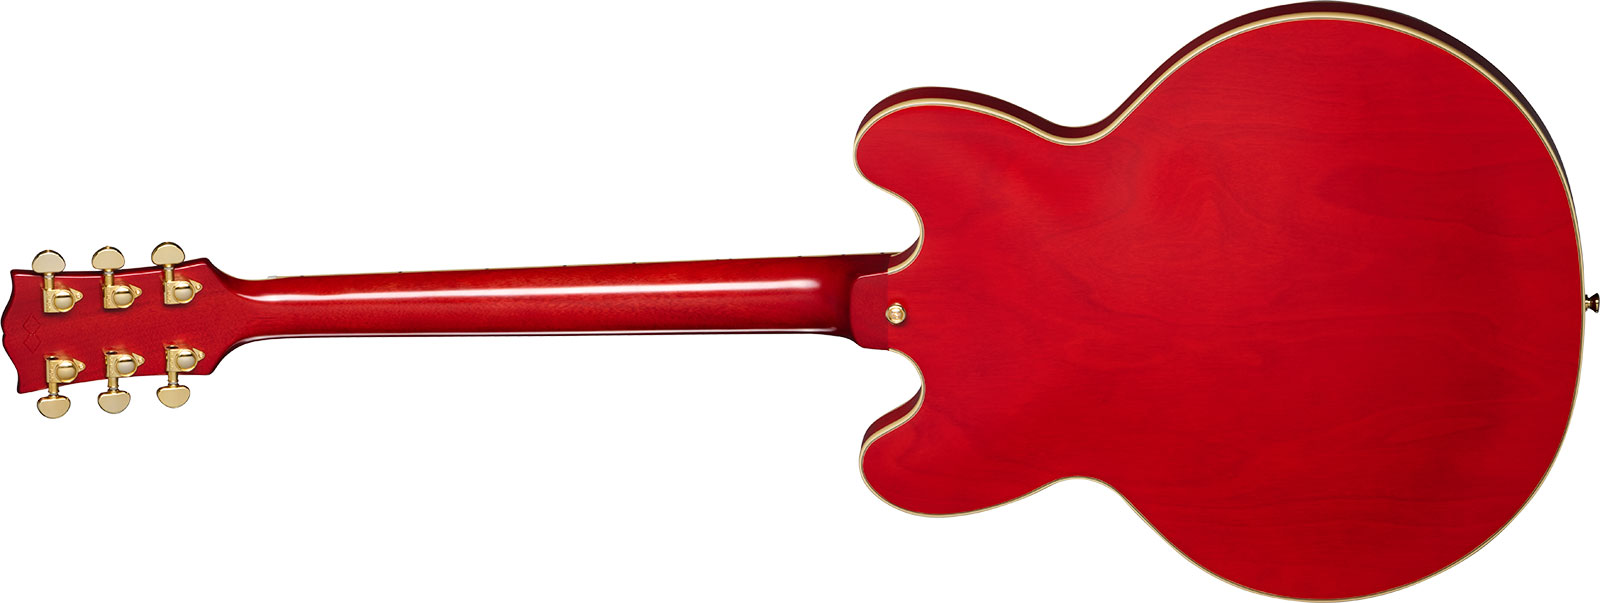 Epiphone Es355 1959 Inspired By 2h Gibson Ht Eb - Vos Cherry Red - Semi hollow elektriche gitaar - Variation 1